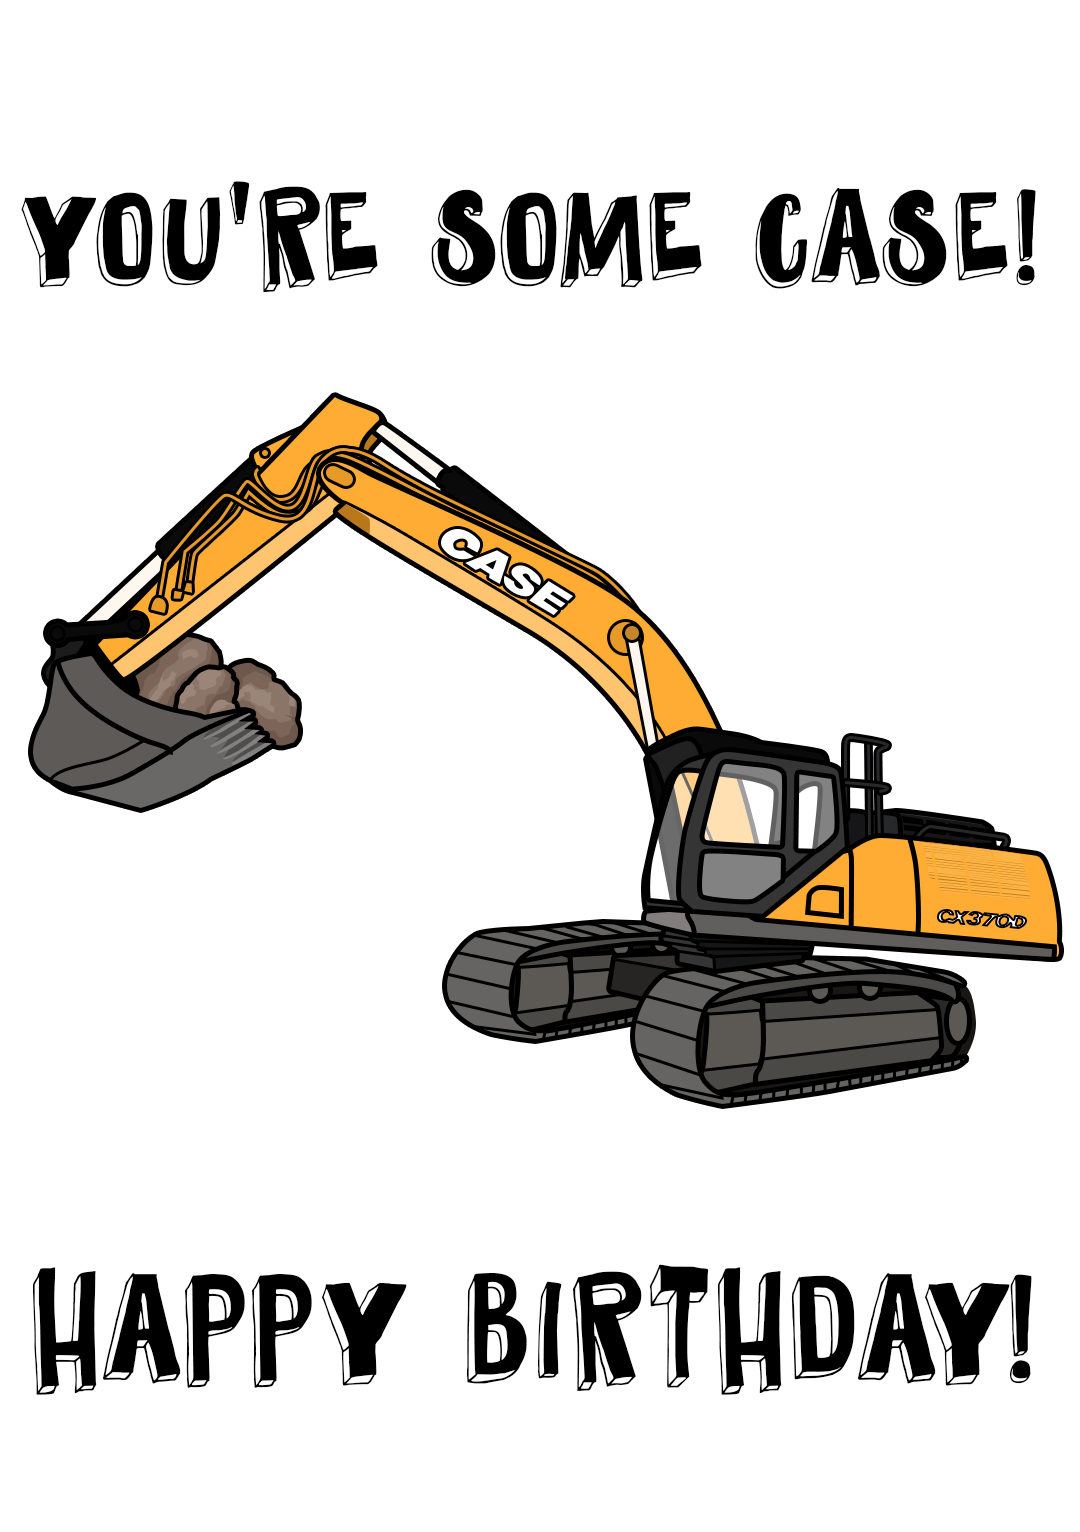 You're Some Case! Happy Birthday!